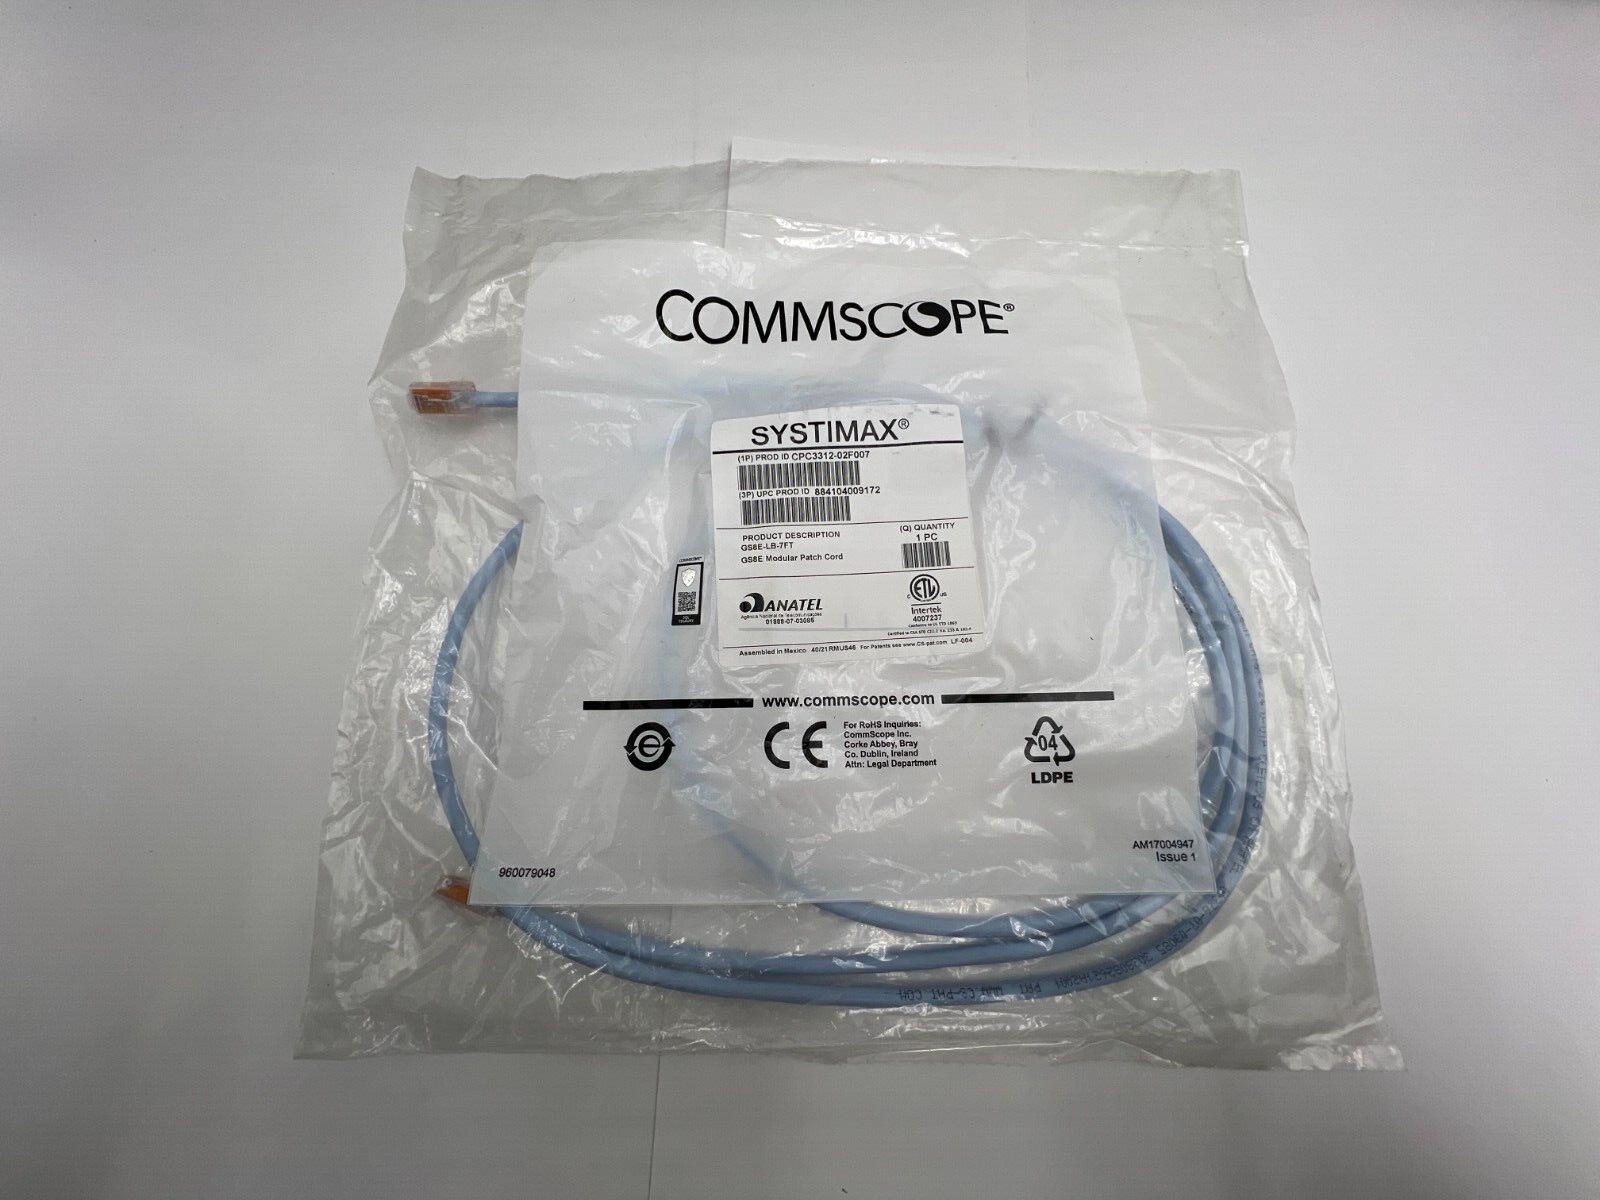 QTY 10 Commscope Systimax CPC3312-02F007 GS8E-LB-7FT Modular Patch Cord Blue